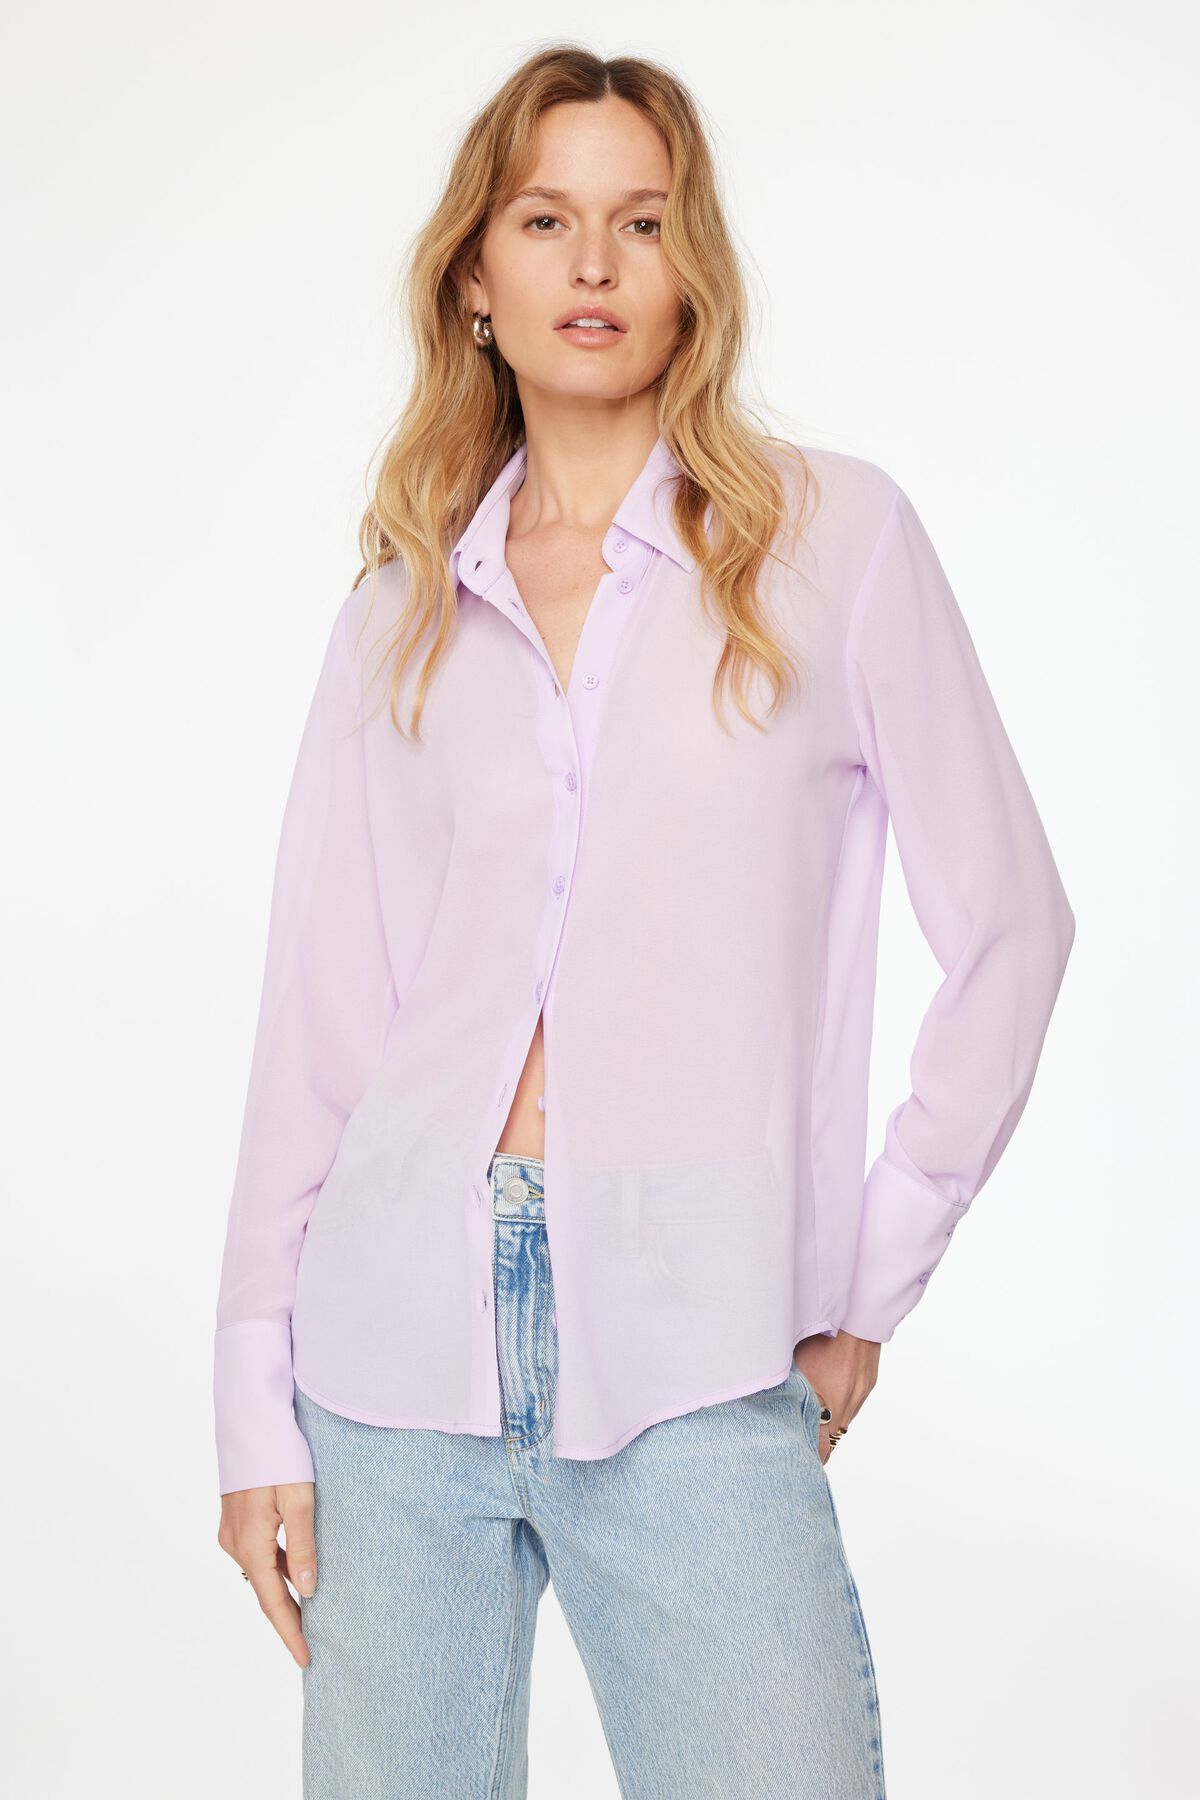 Dynamite Matisse Slim Sheer Button Up Shirt. 1